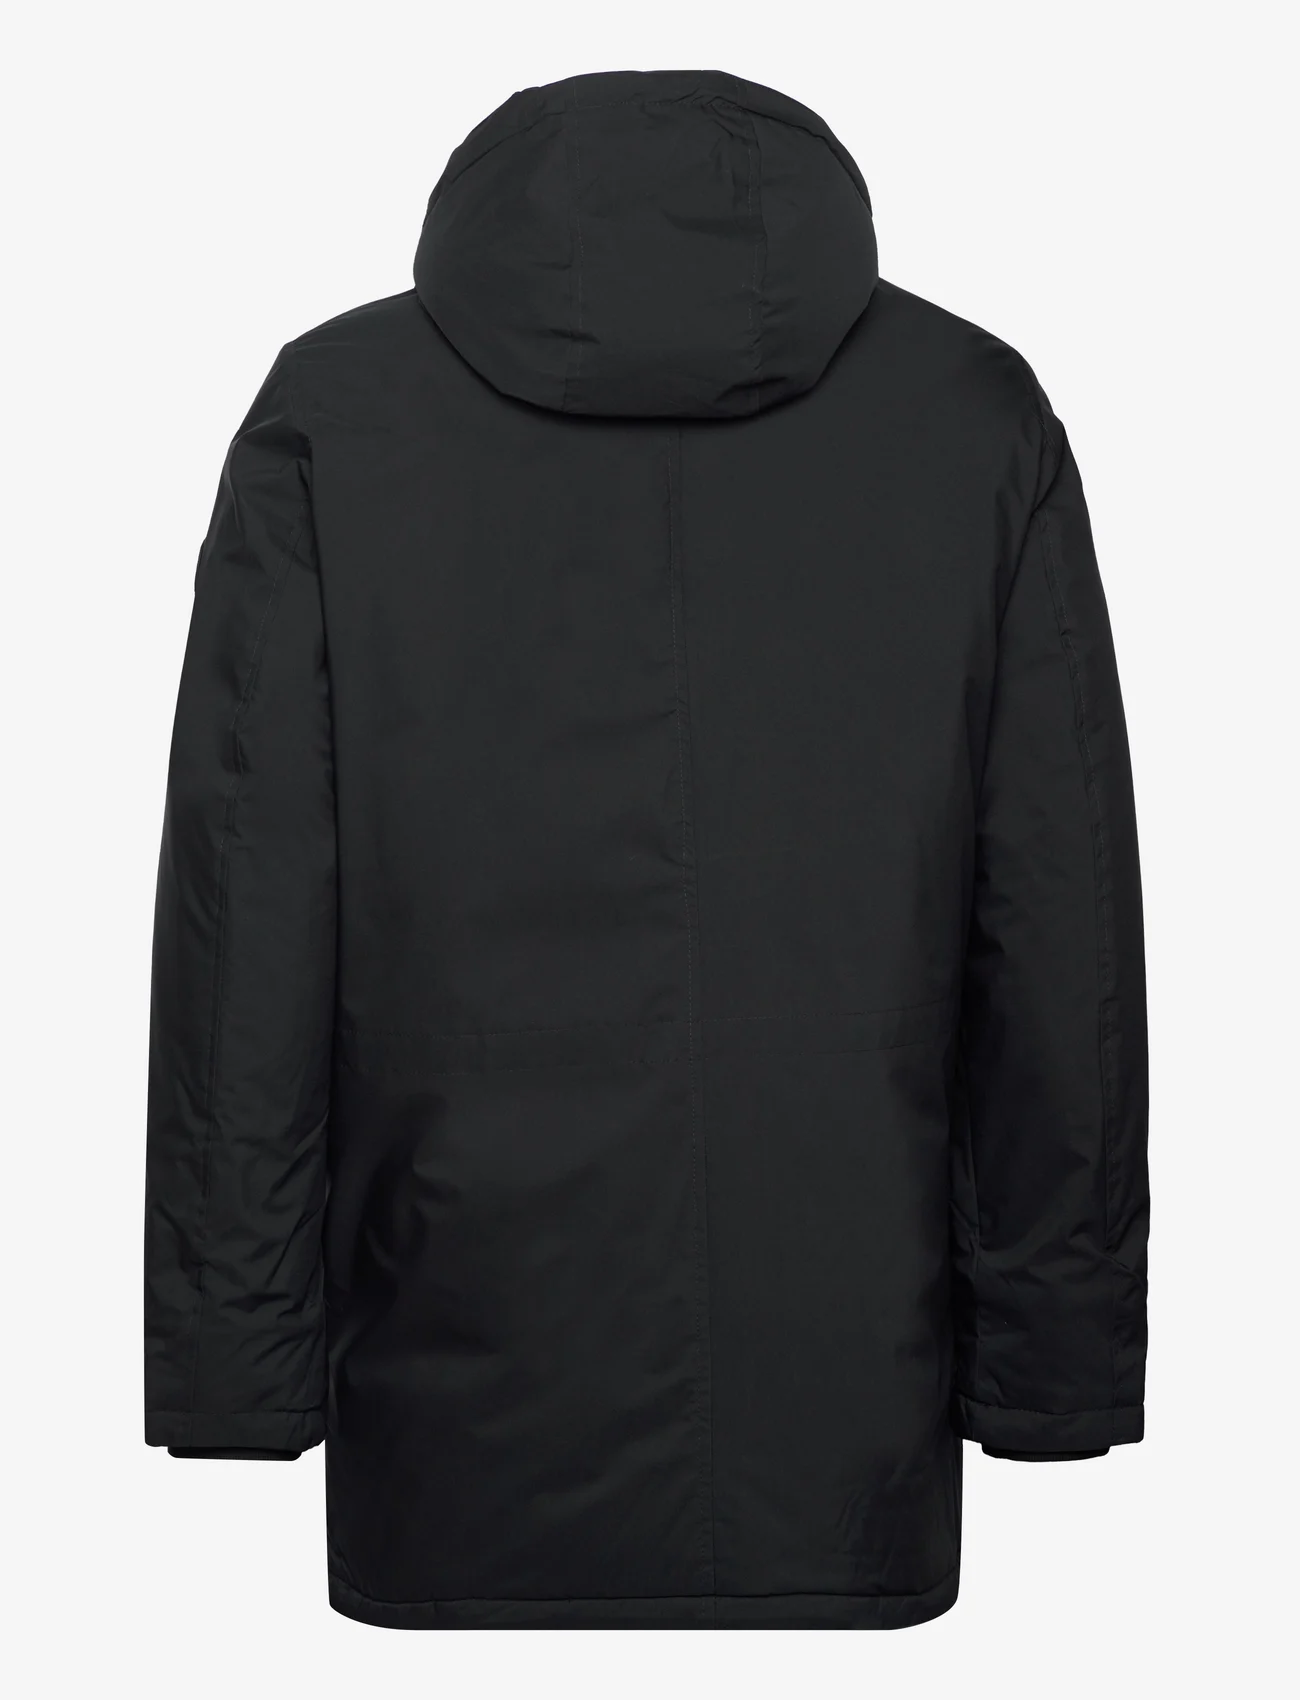 Lindbergh - Hooded parka jacket - ziemas jakas - black - 1